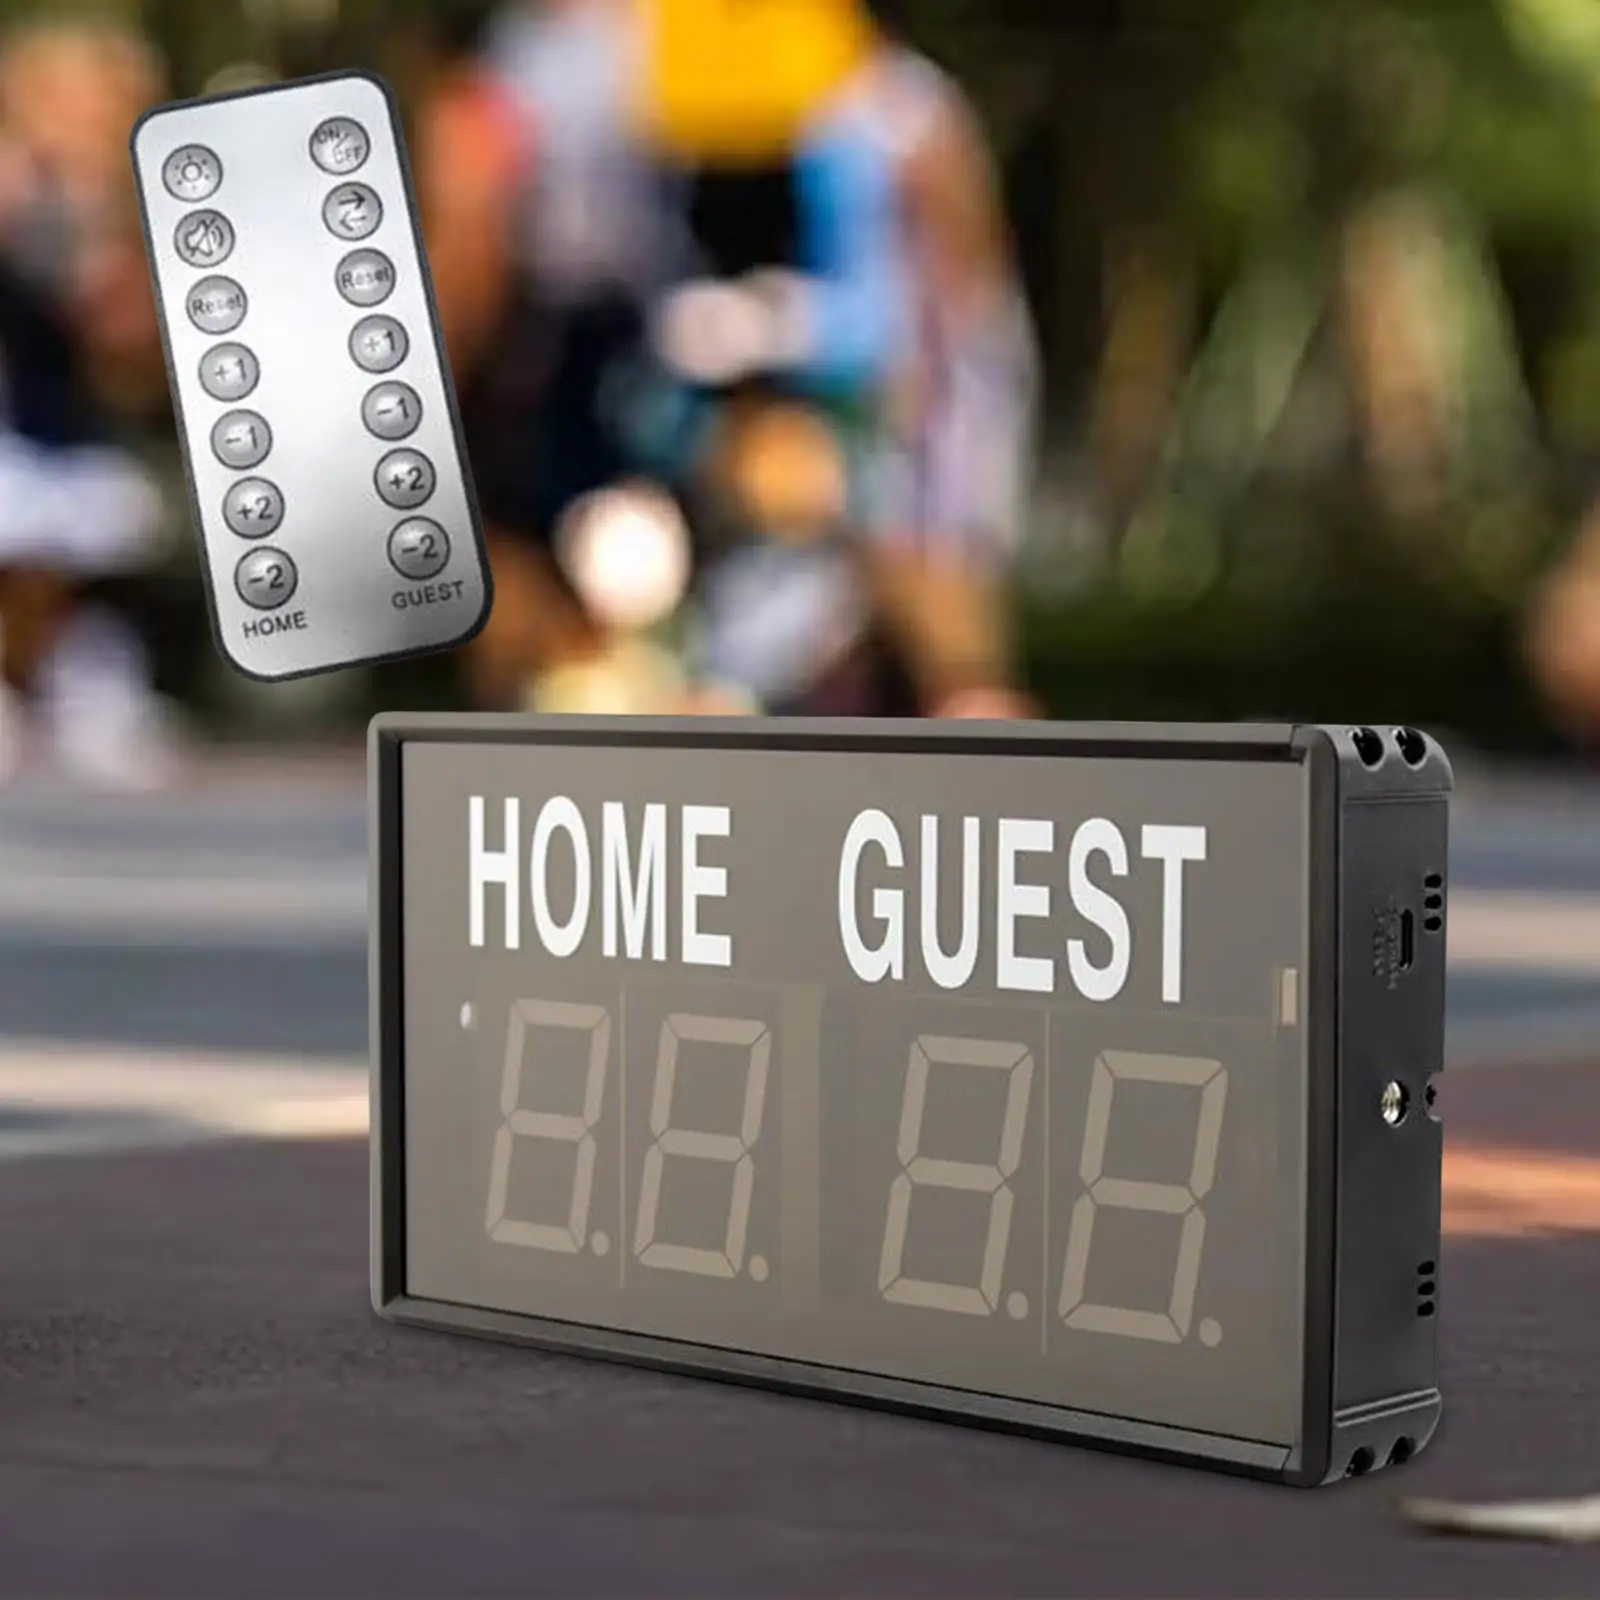 Electronic Scoreboard Mini Score Counter Basketball Scoreboard Digital Scoreboard for Games Competition Indoor Sports Badminton